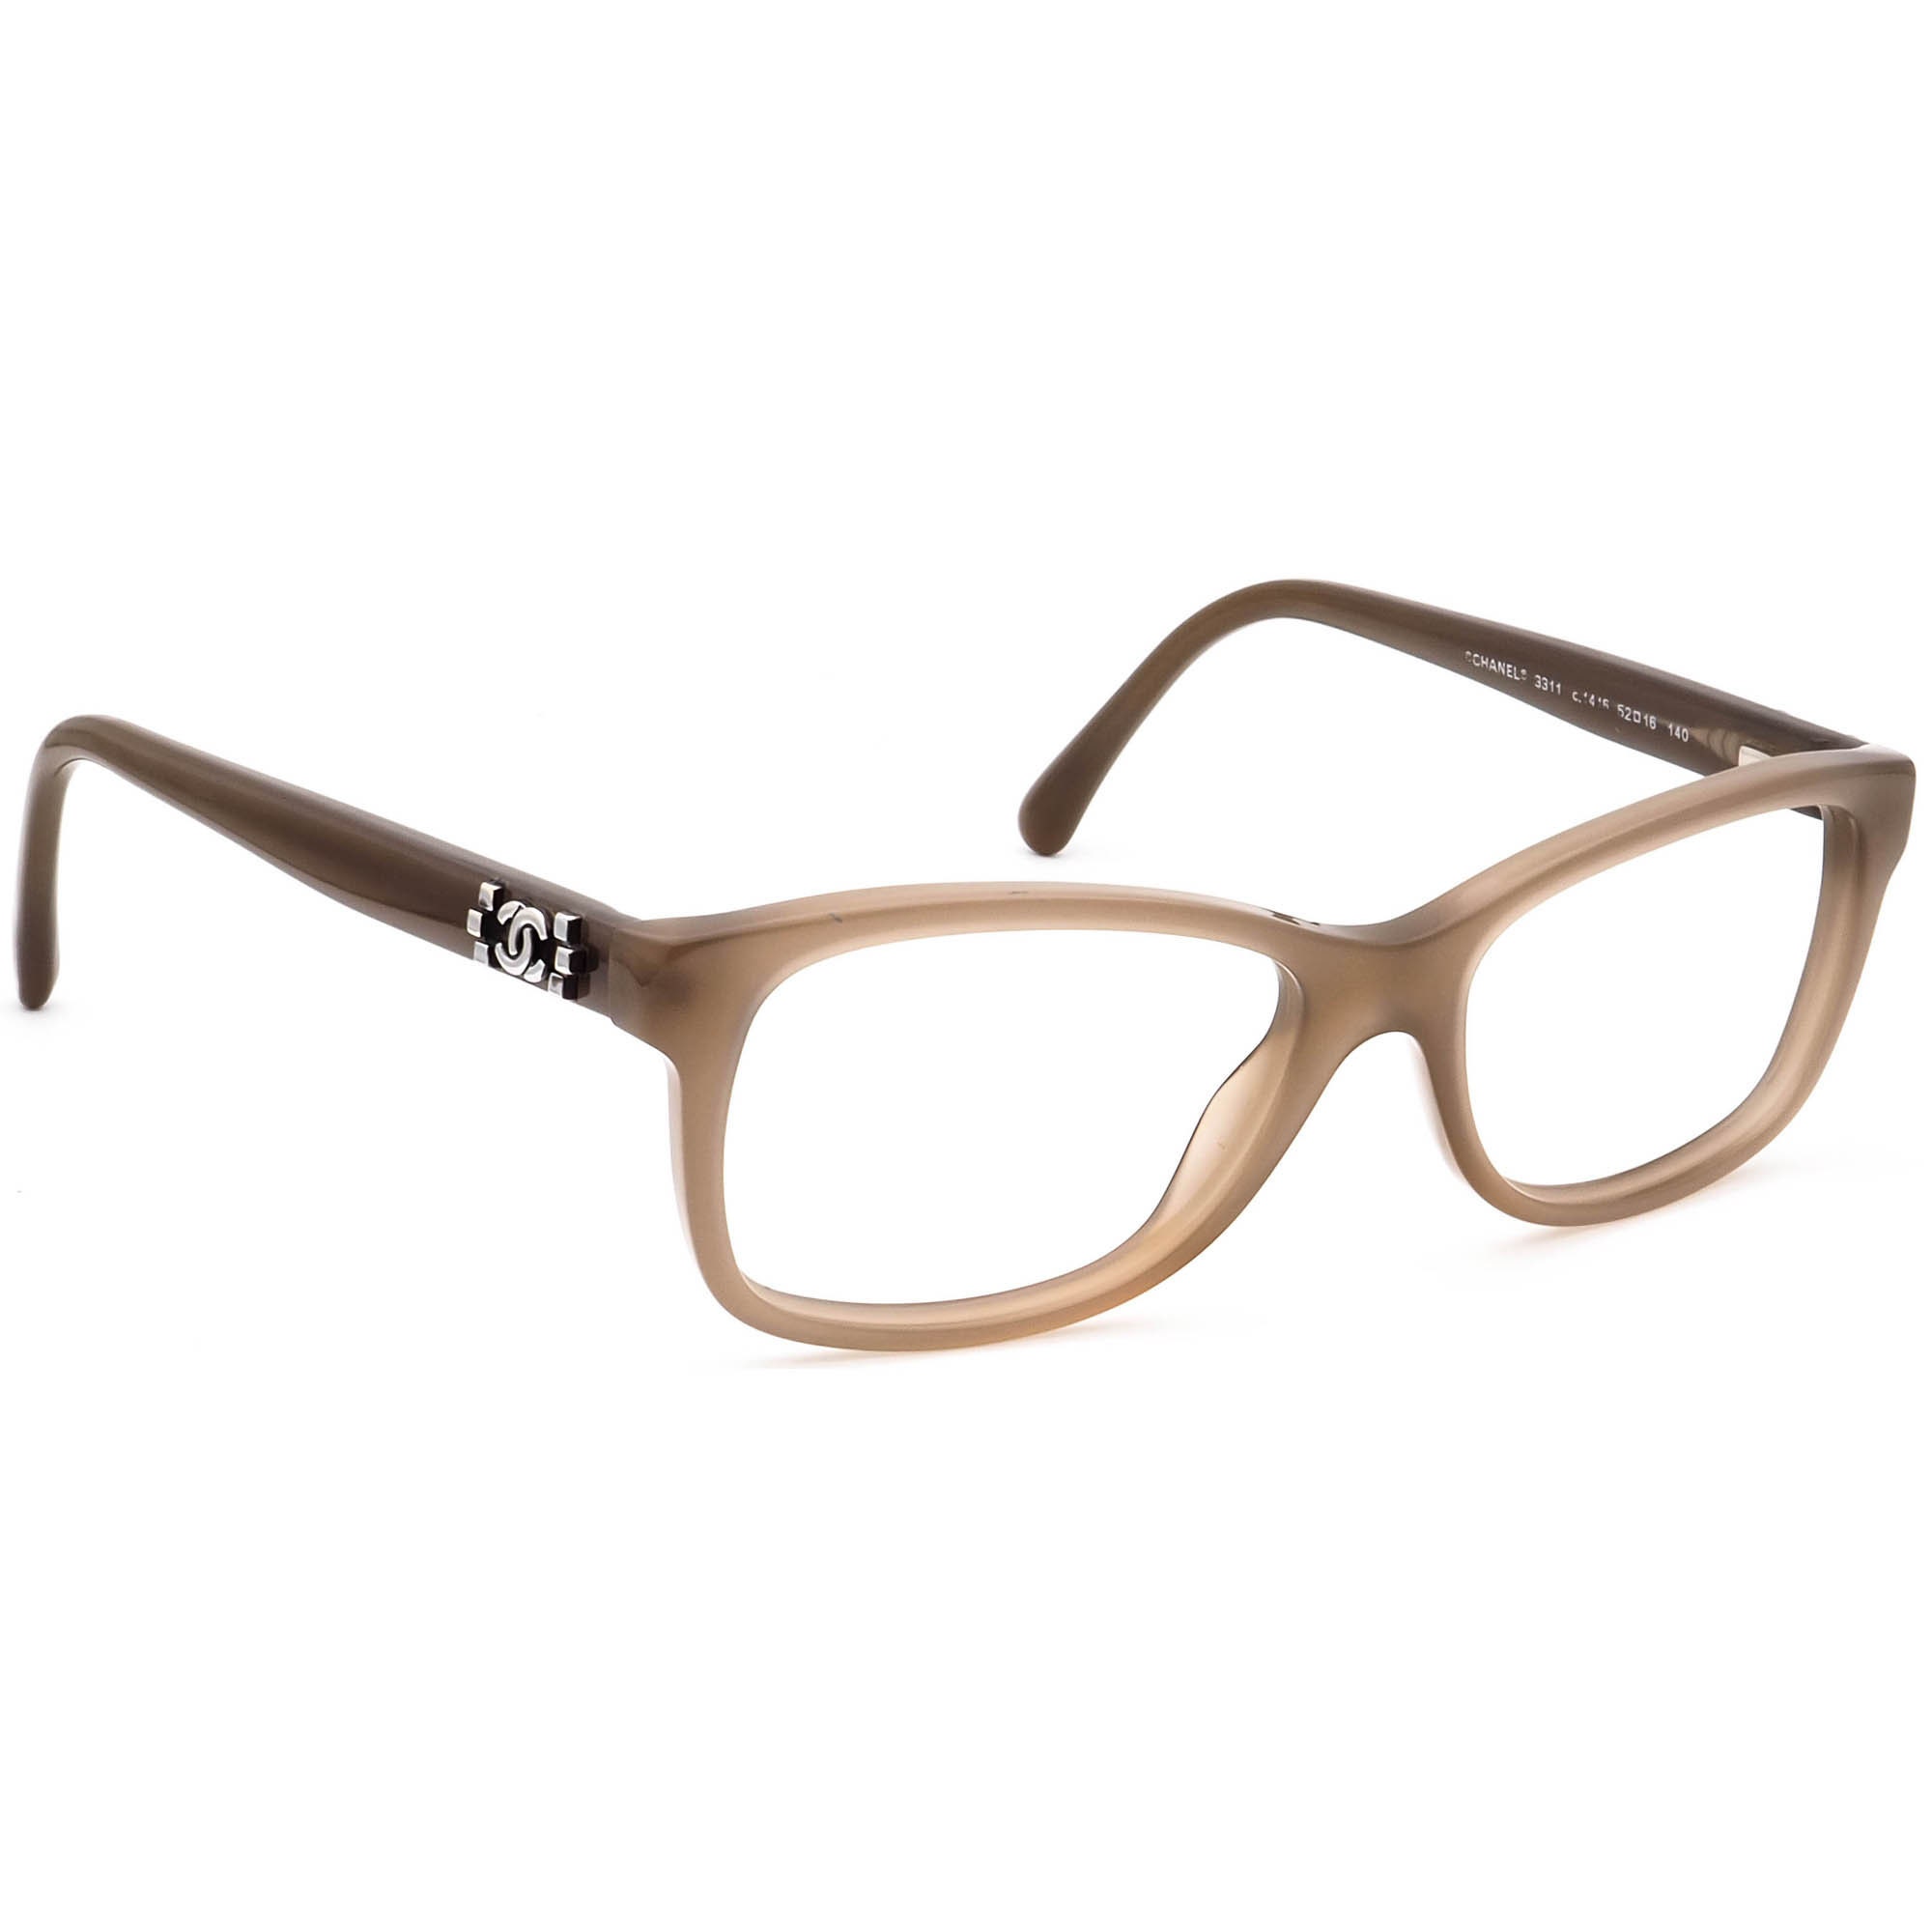 Chanel Women's Eyeglasses 3311 c.1416 Tan Square Frame Italy 52[]16 140